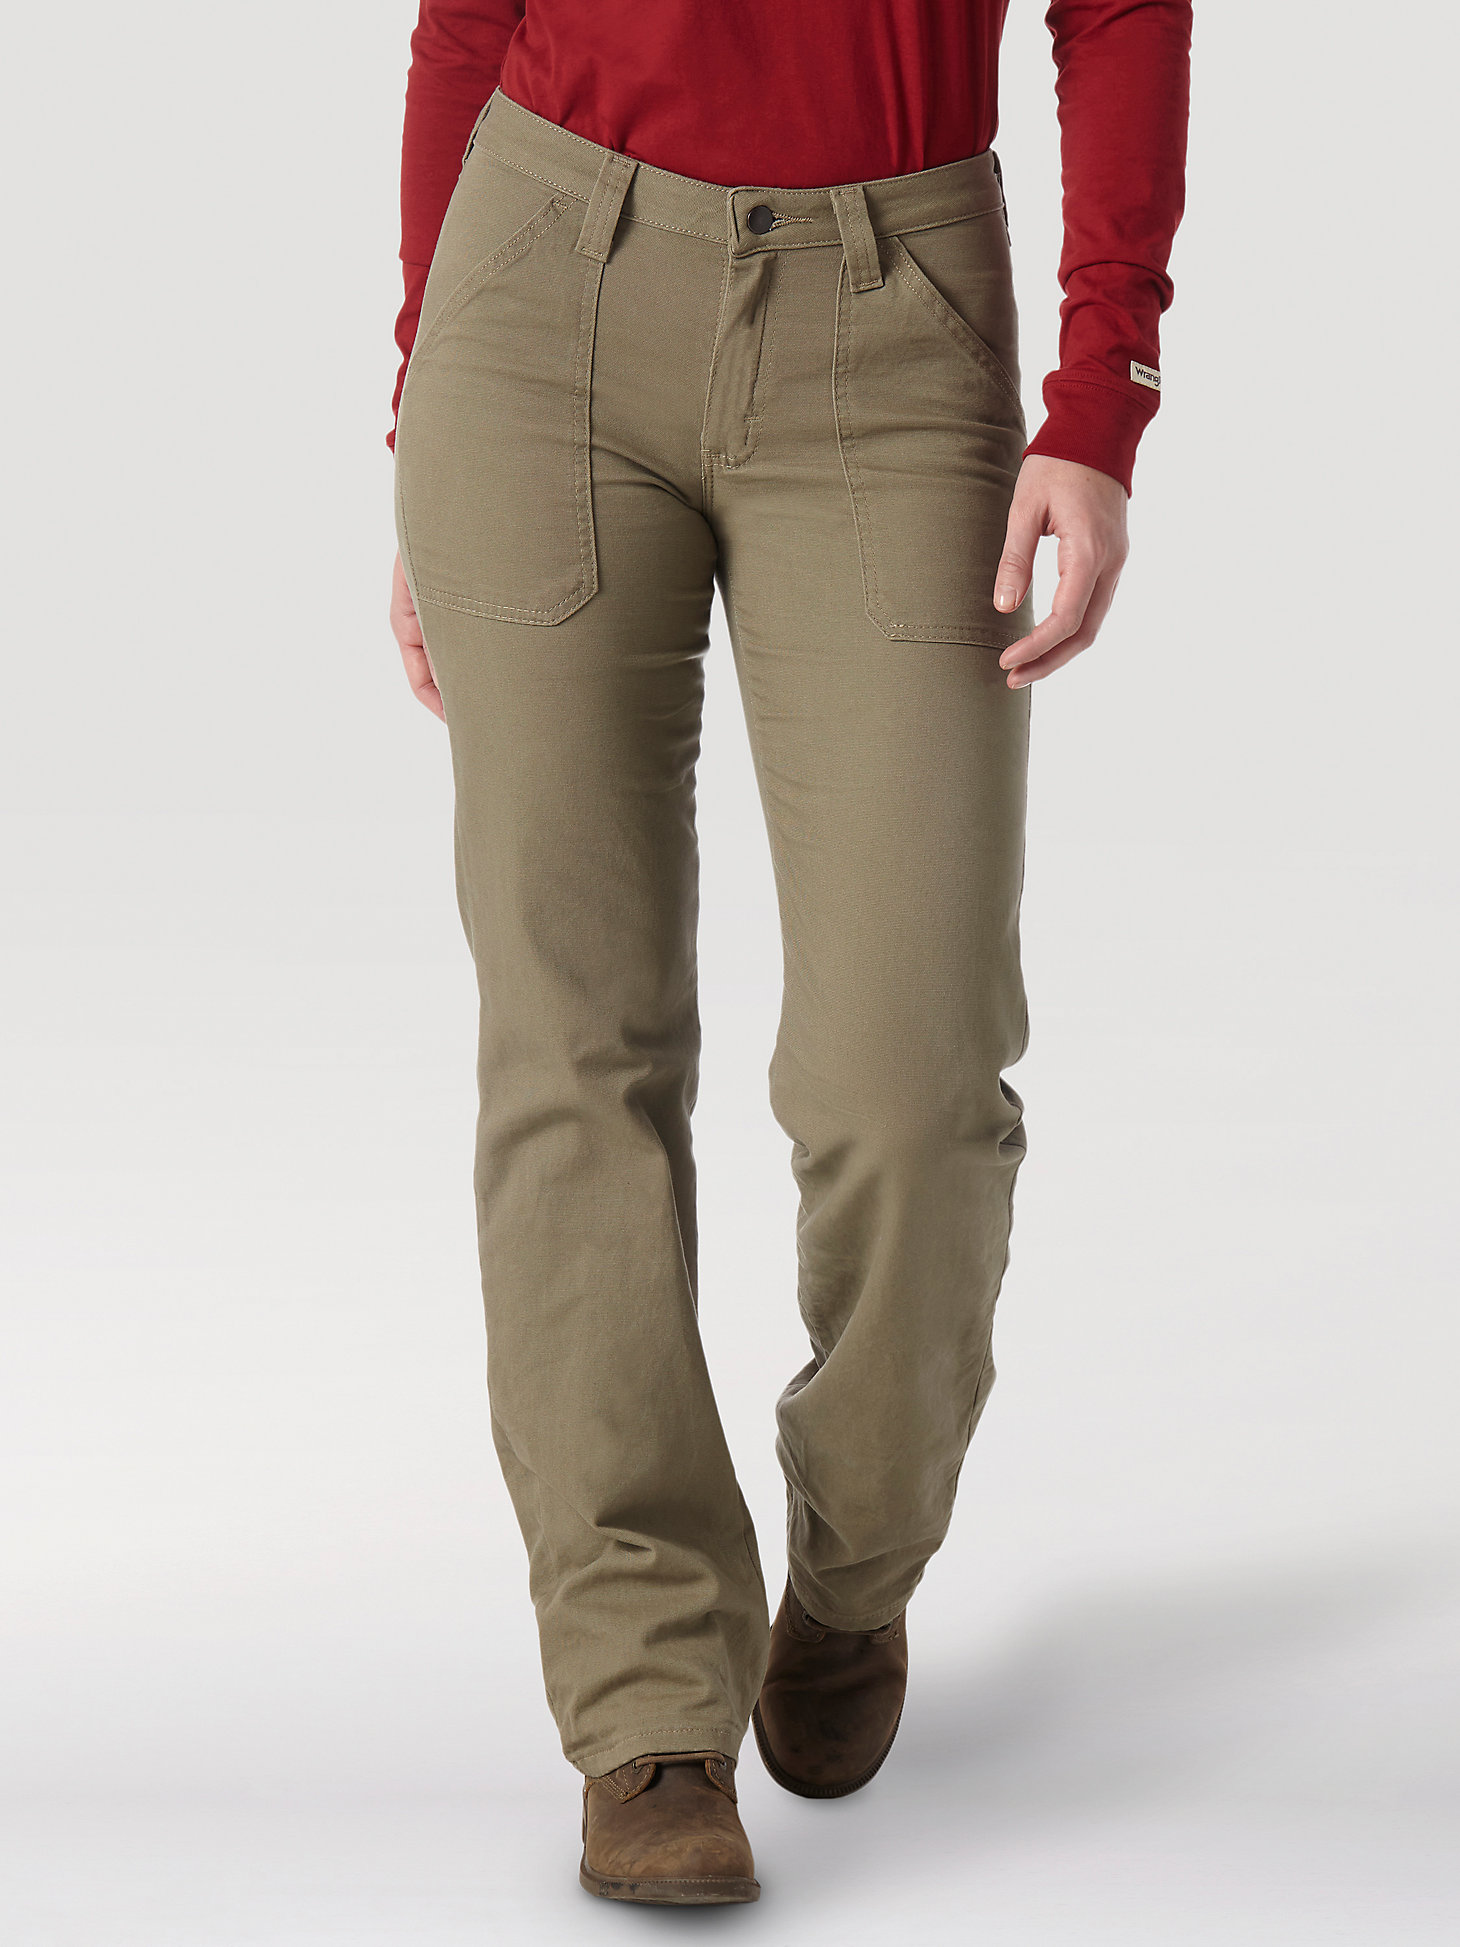 Women's Wrangler® RIGGS Workwear® Advanced Comfort Work Pant in Bark main view